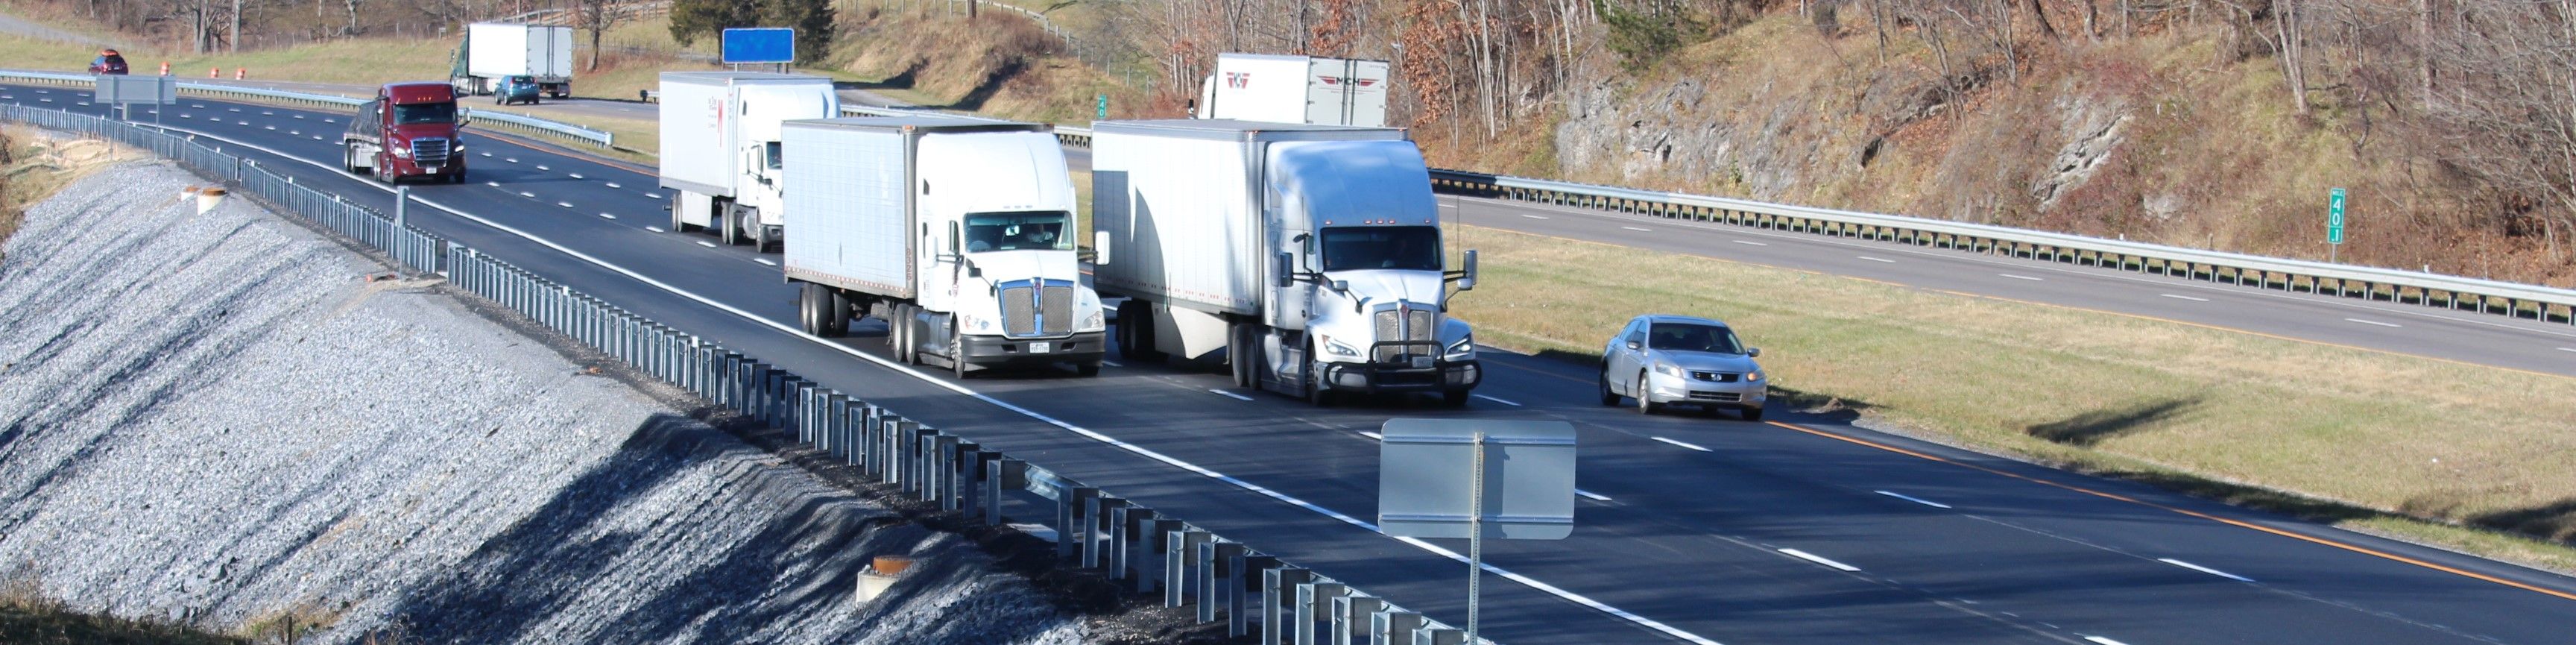 Trucks on I-81